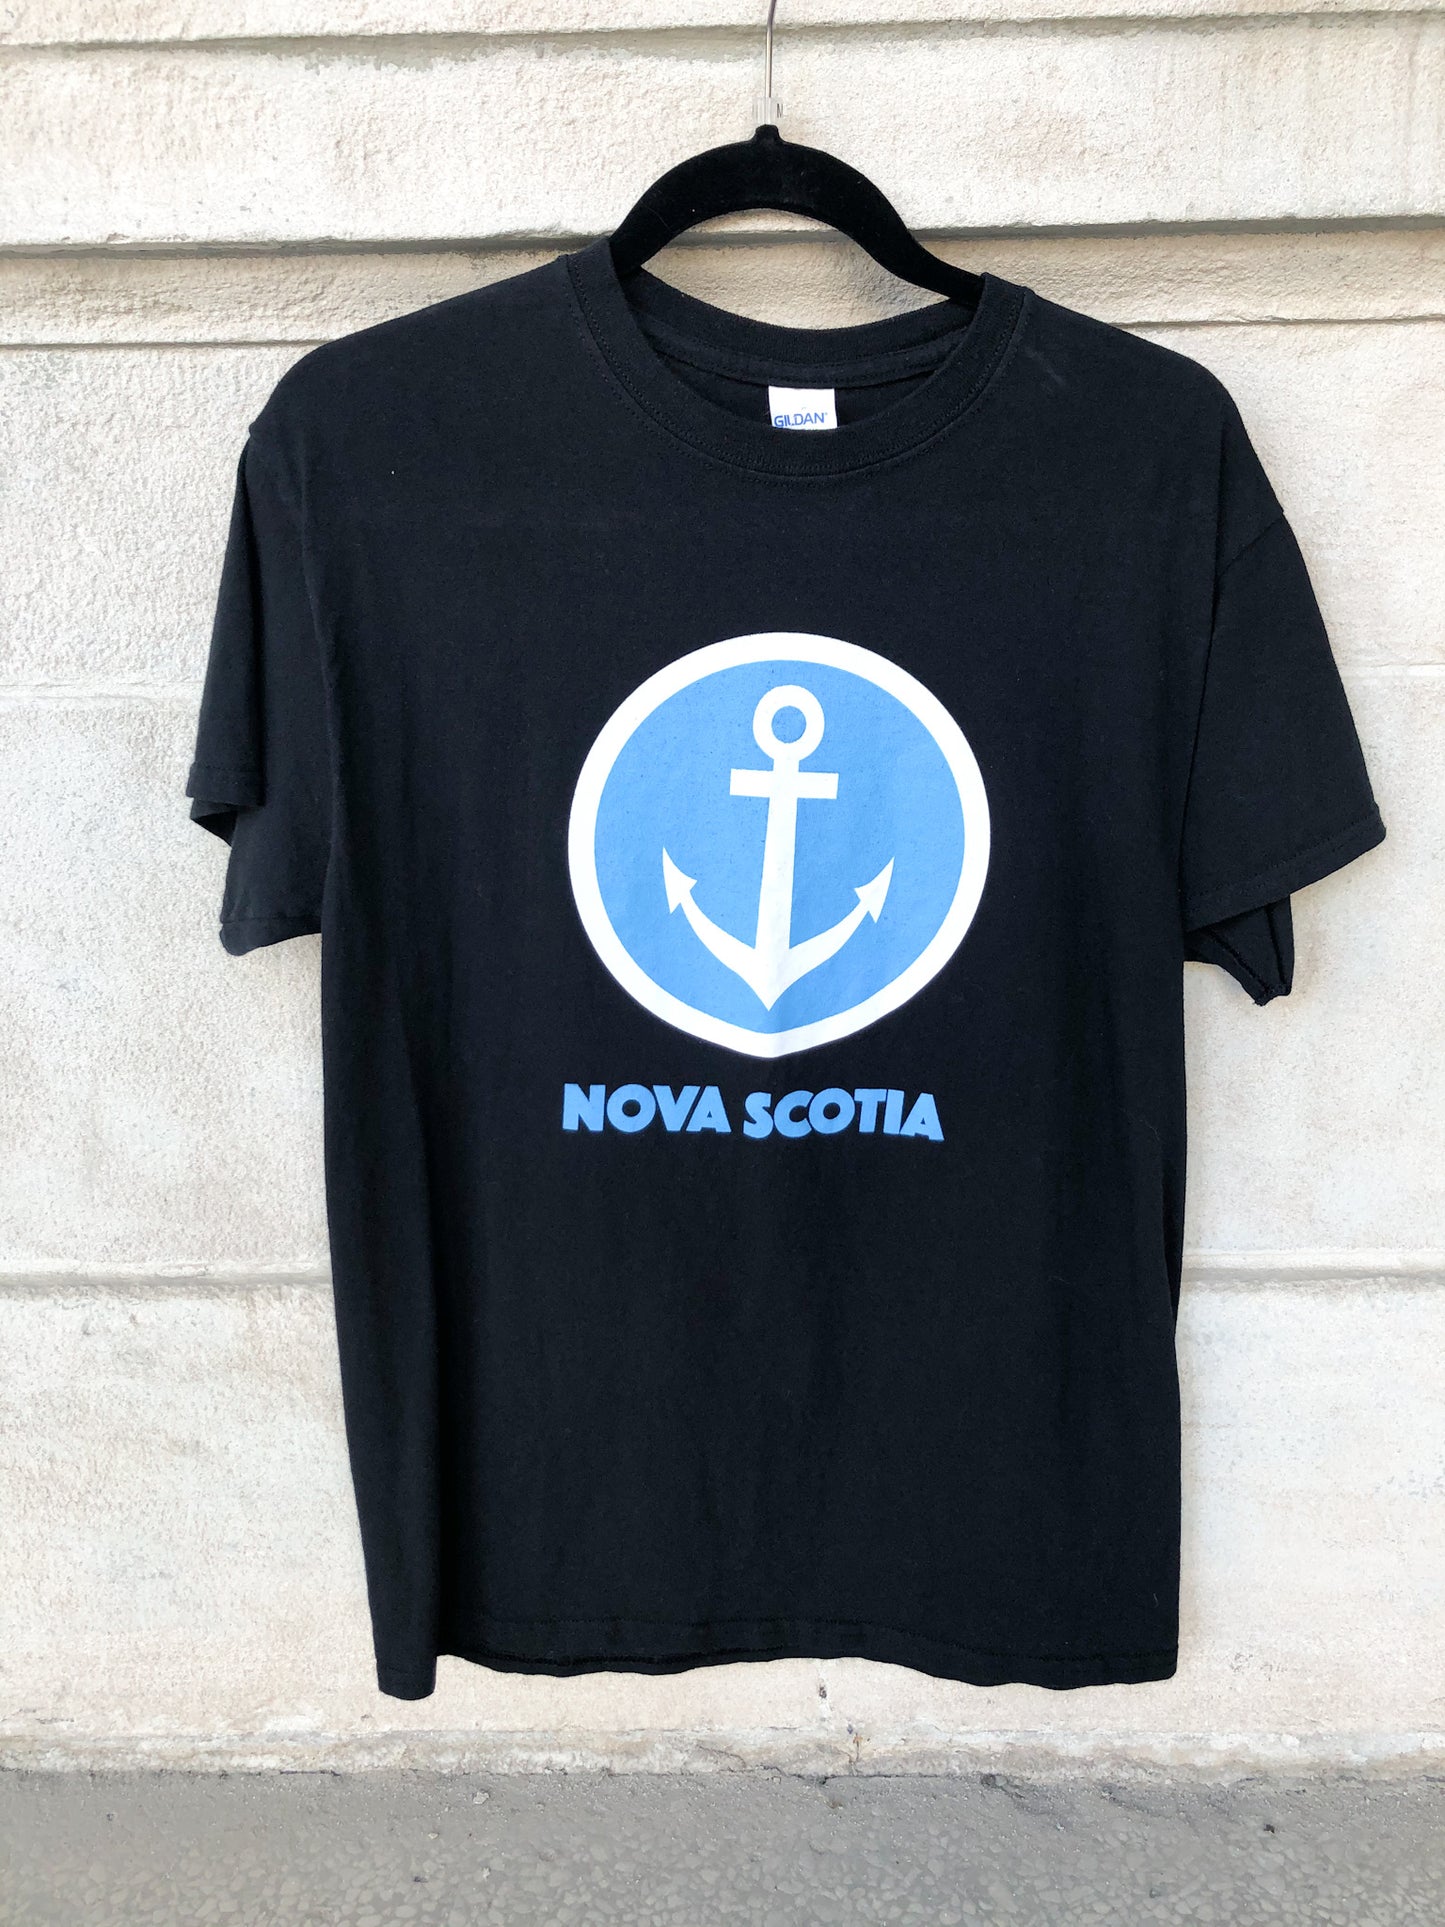 Nova Scotia Anchor Black Graphic 100% Cotton T-Shirt - Medium